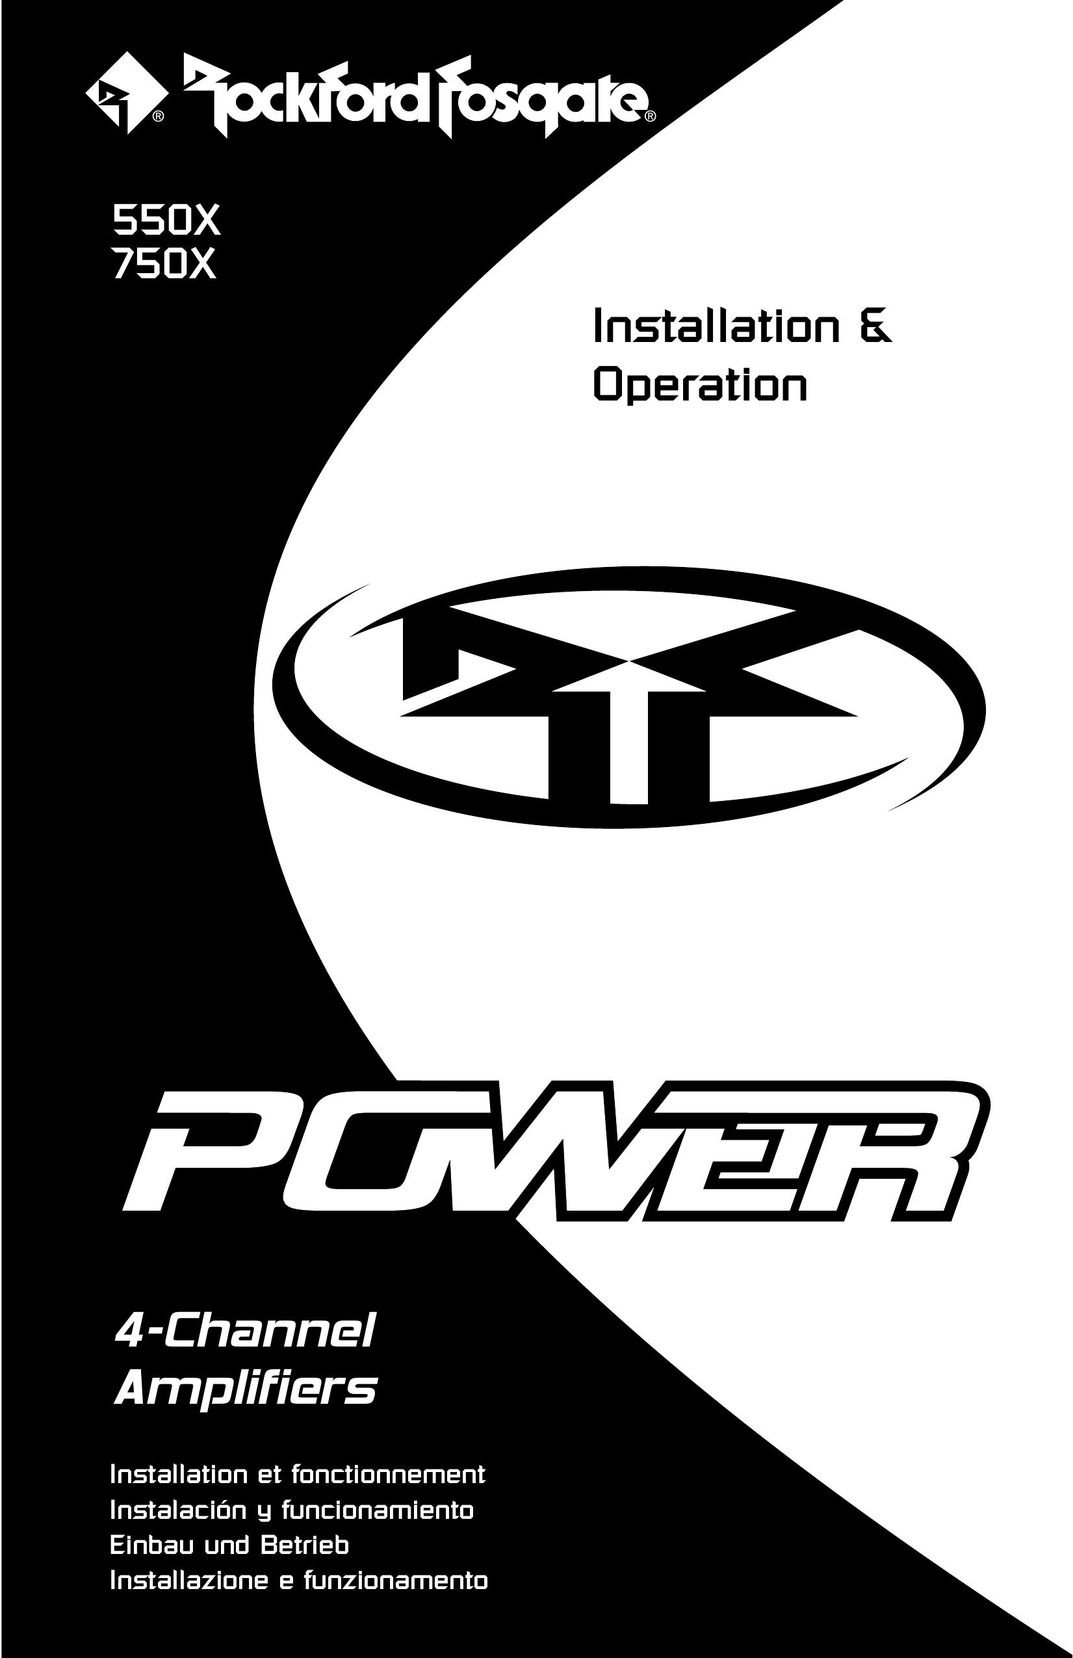 Rockford Fosgate 750X Car Amplifier User Manual